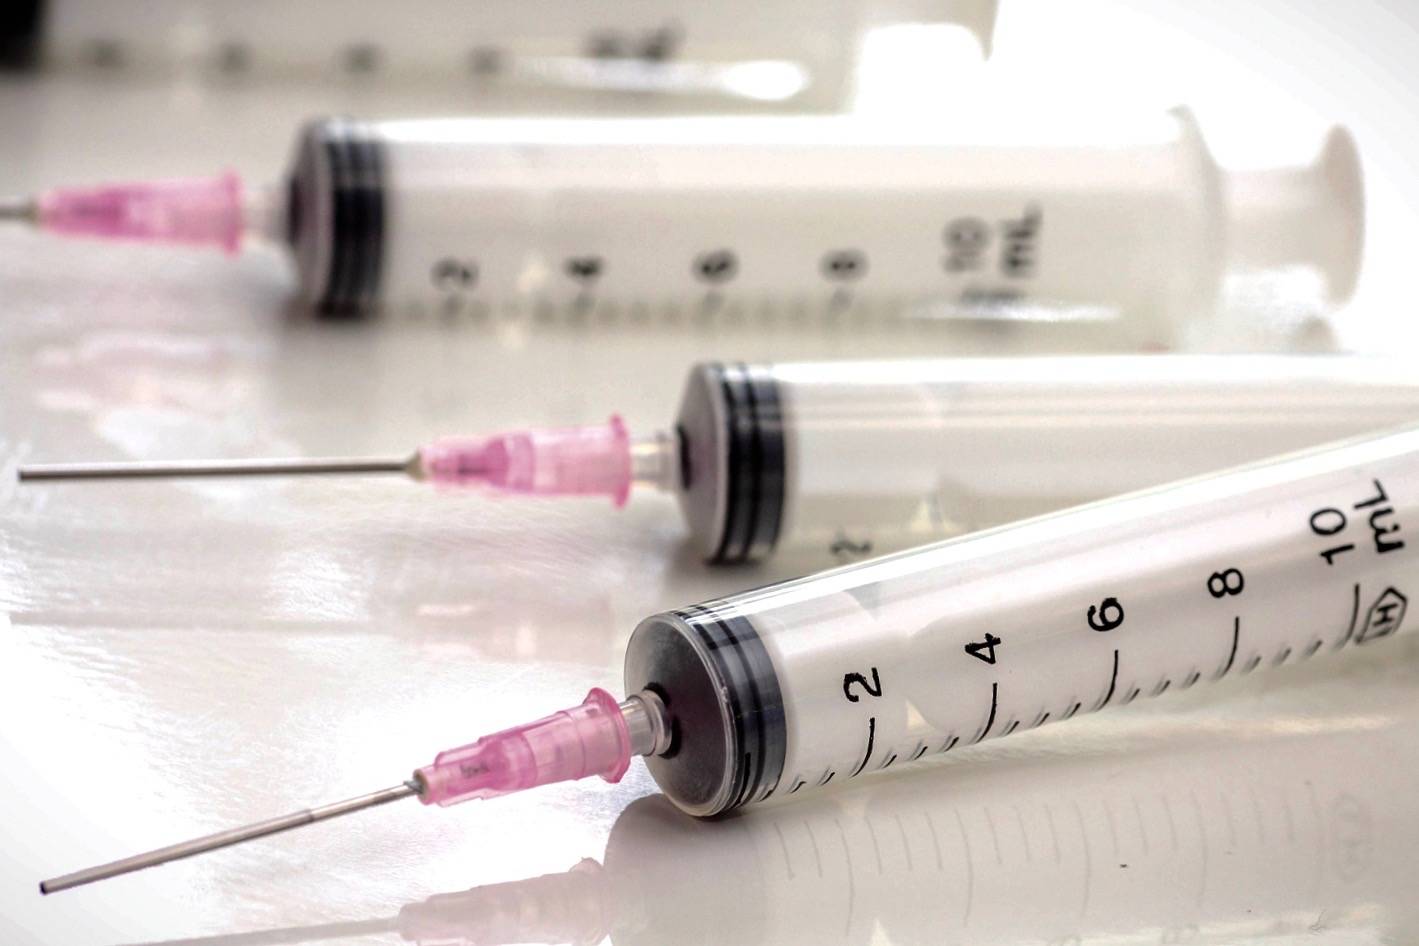 New case of measles found in Auburn